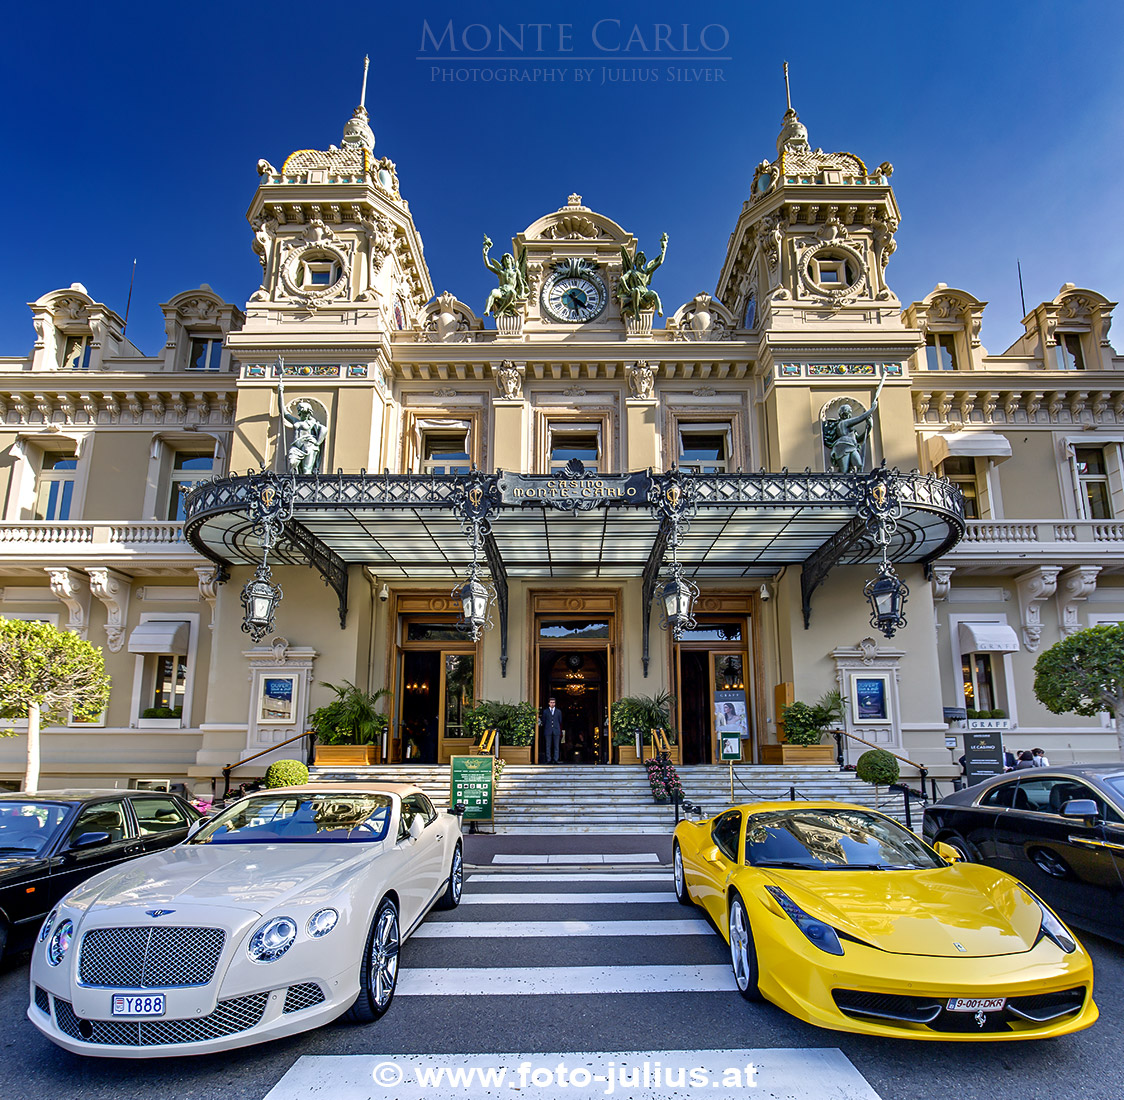 Monte_Carlo_018a.jpg, 523kB